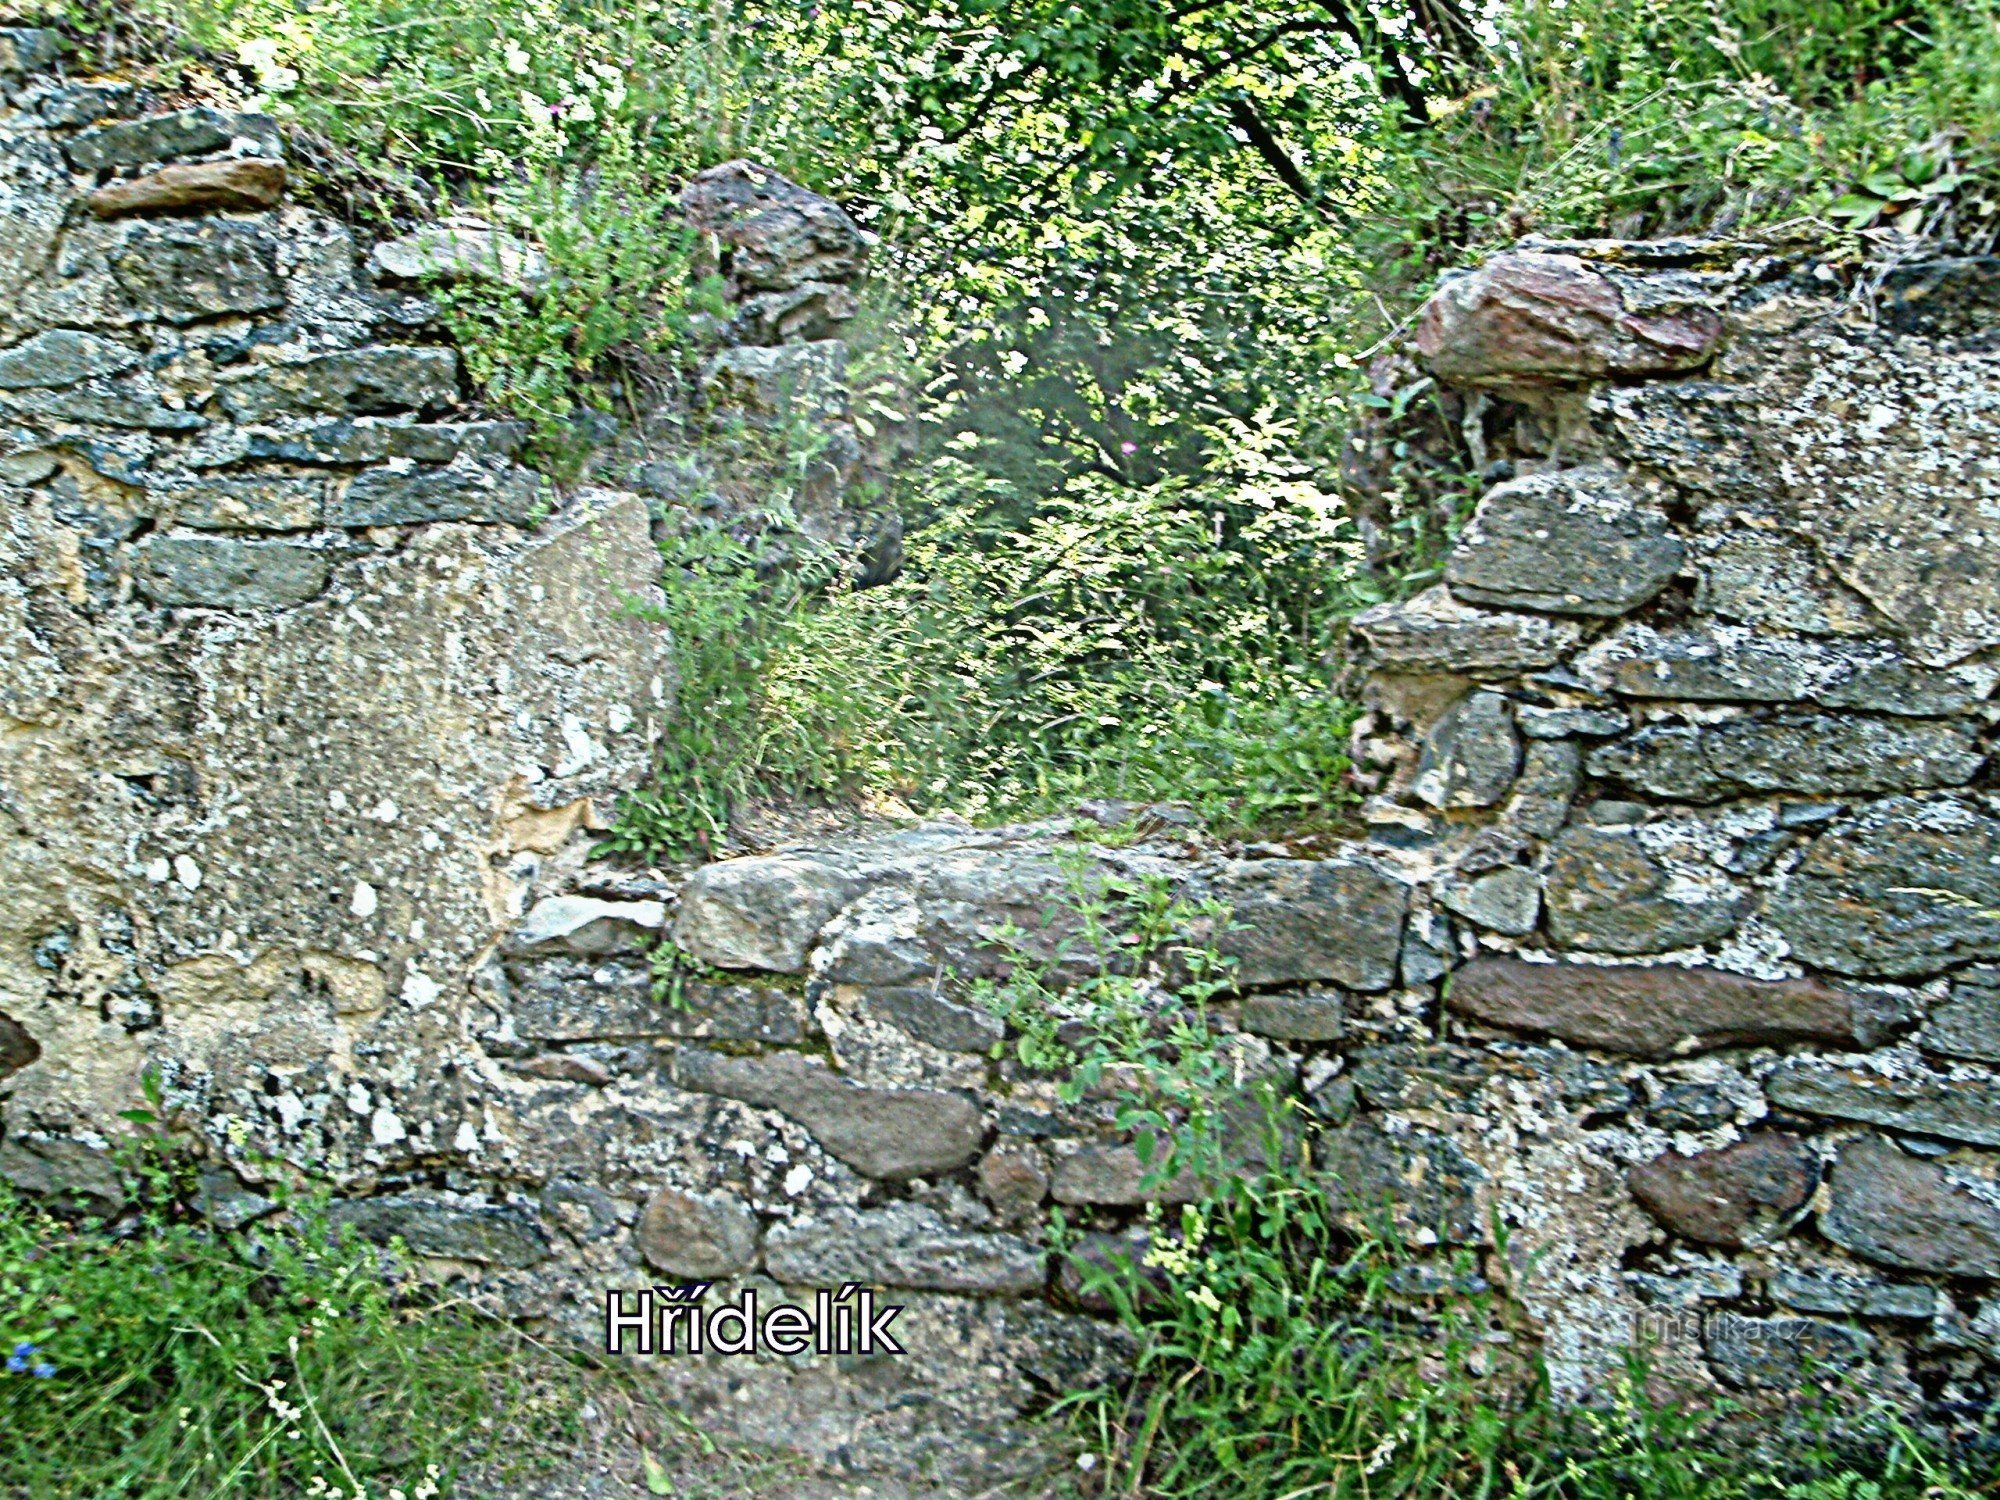 Blíževedly - de ruïnes van Hřídelík Castle